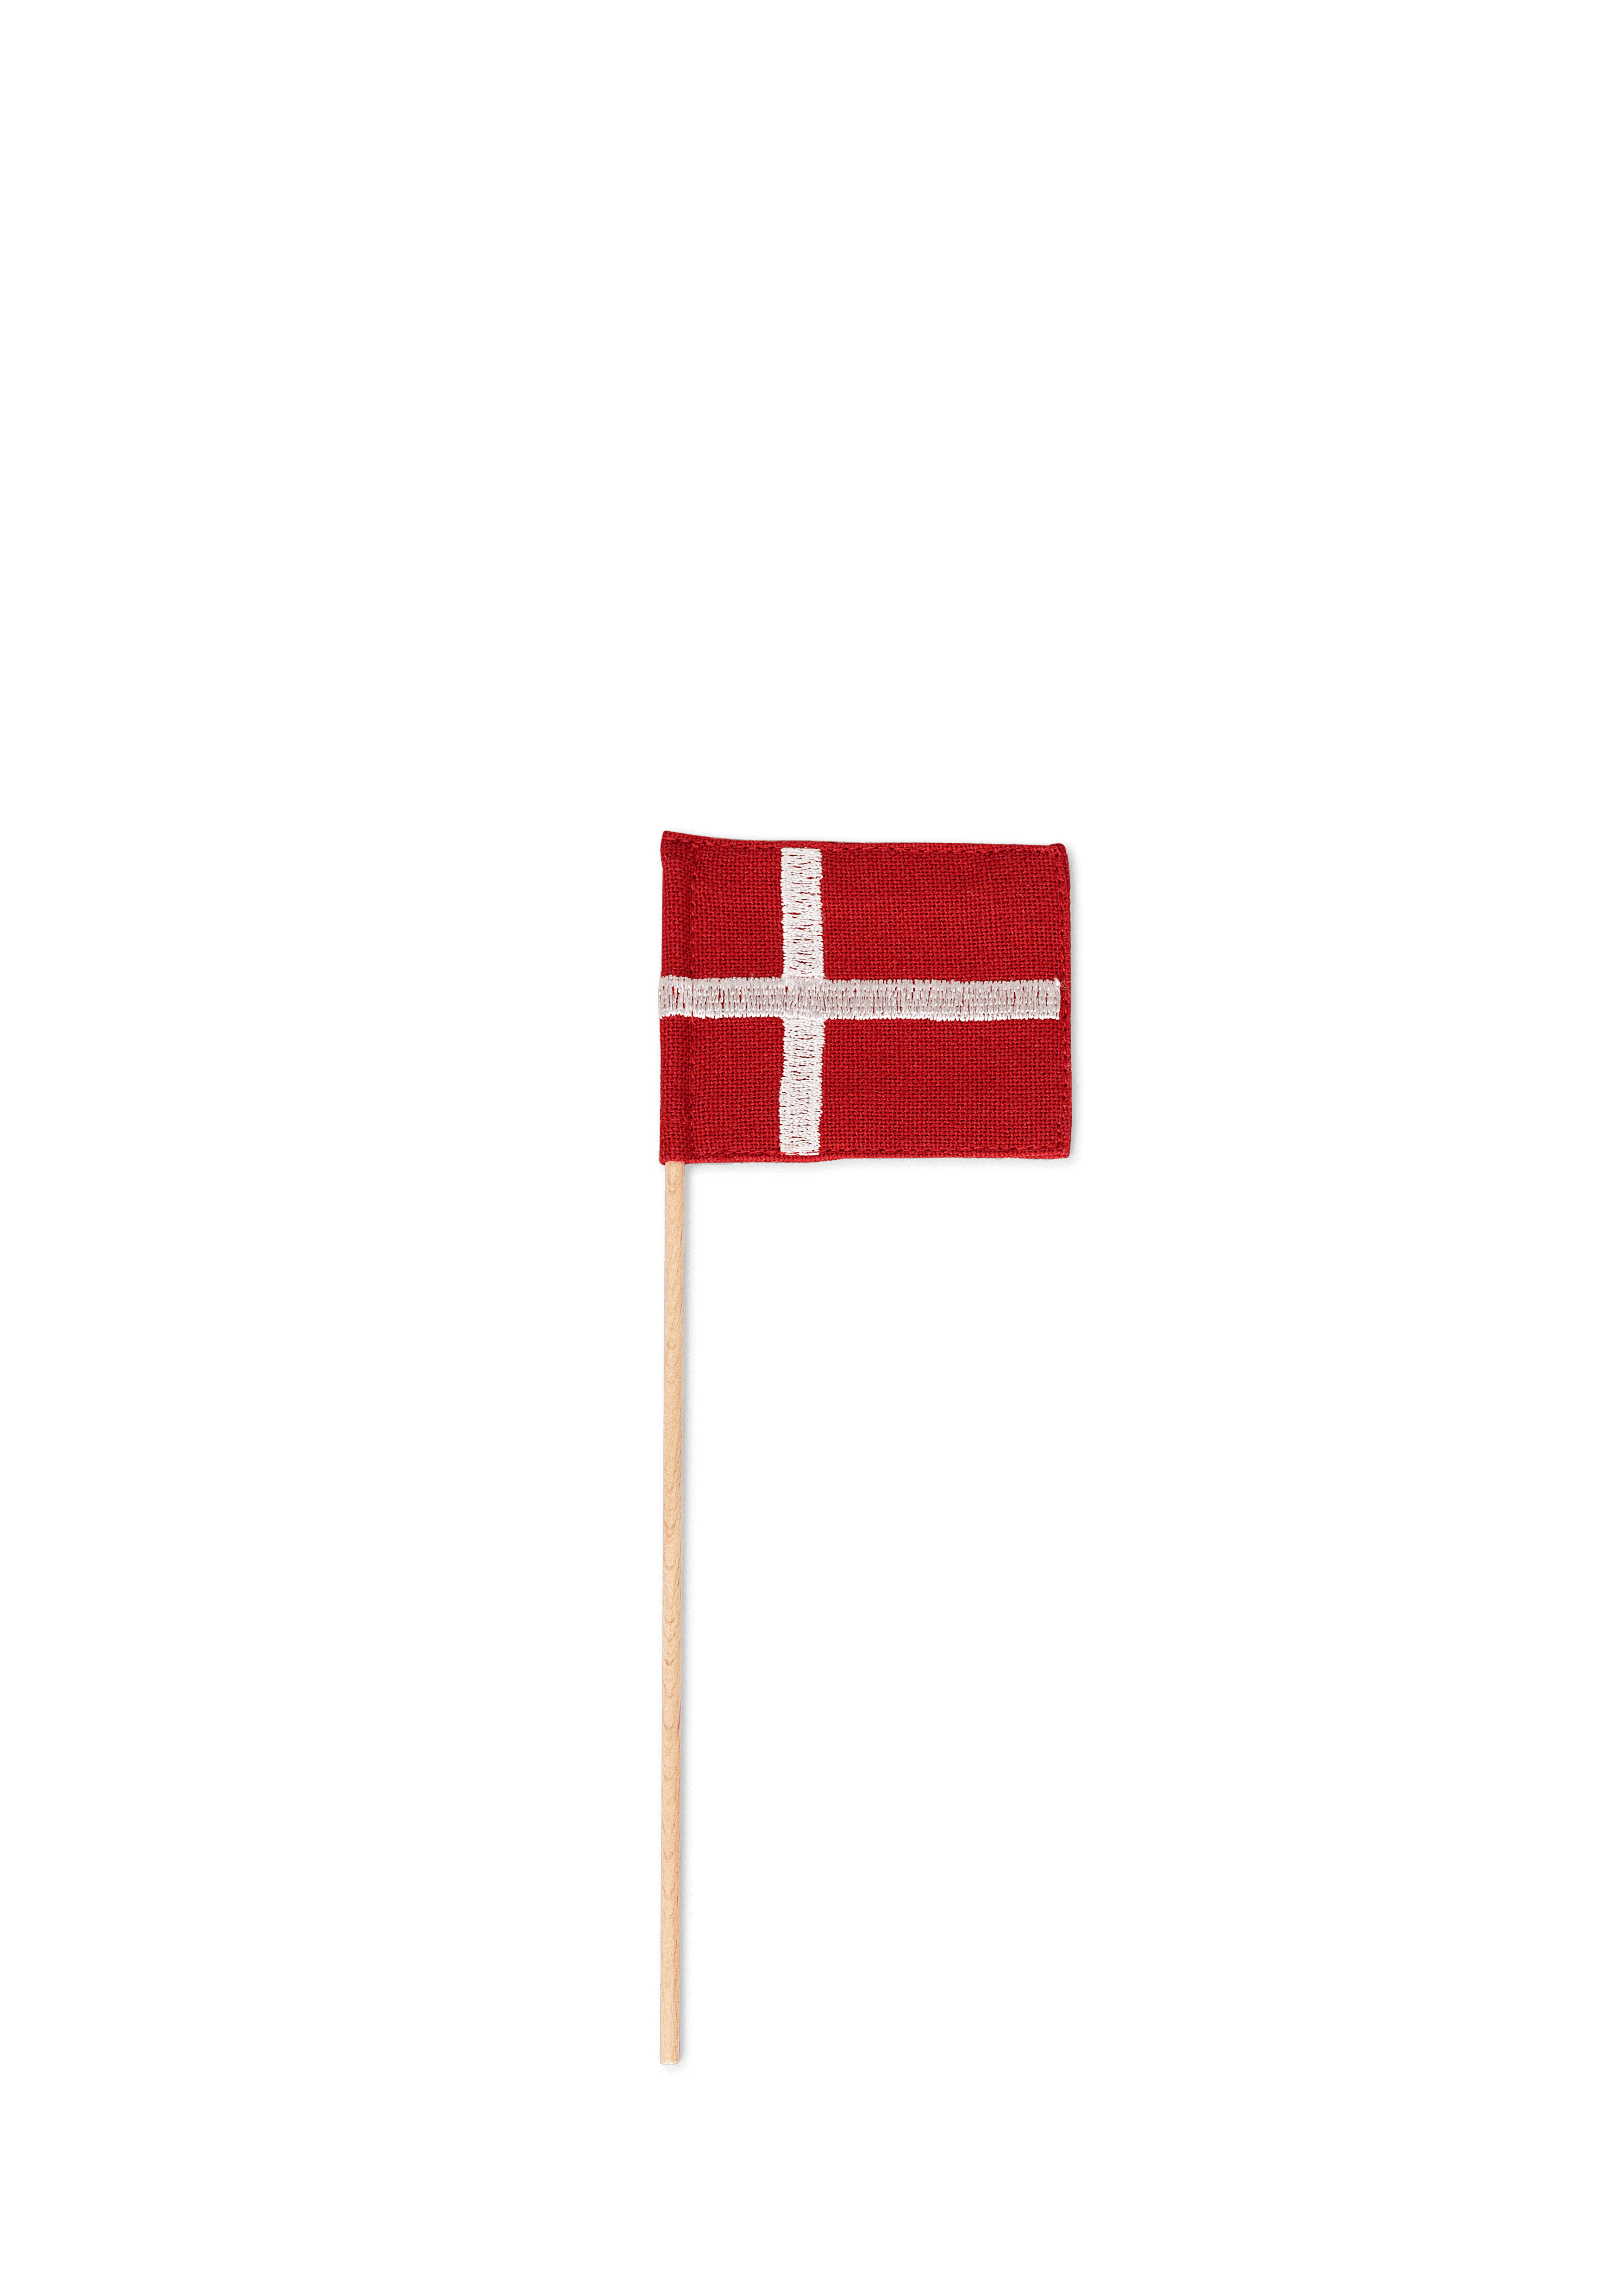 Textil Flagge für mini Fahnenträger (39226) Ersatzteile